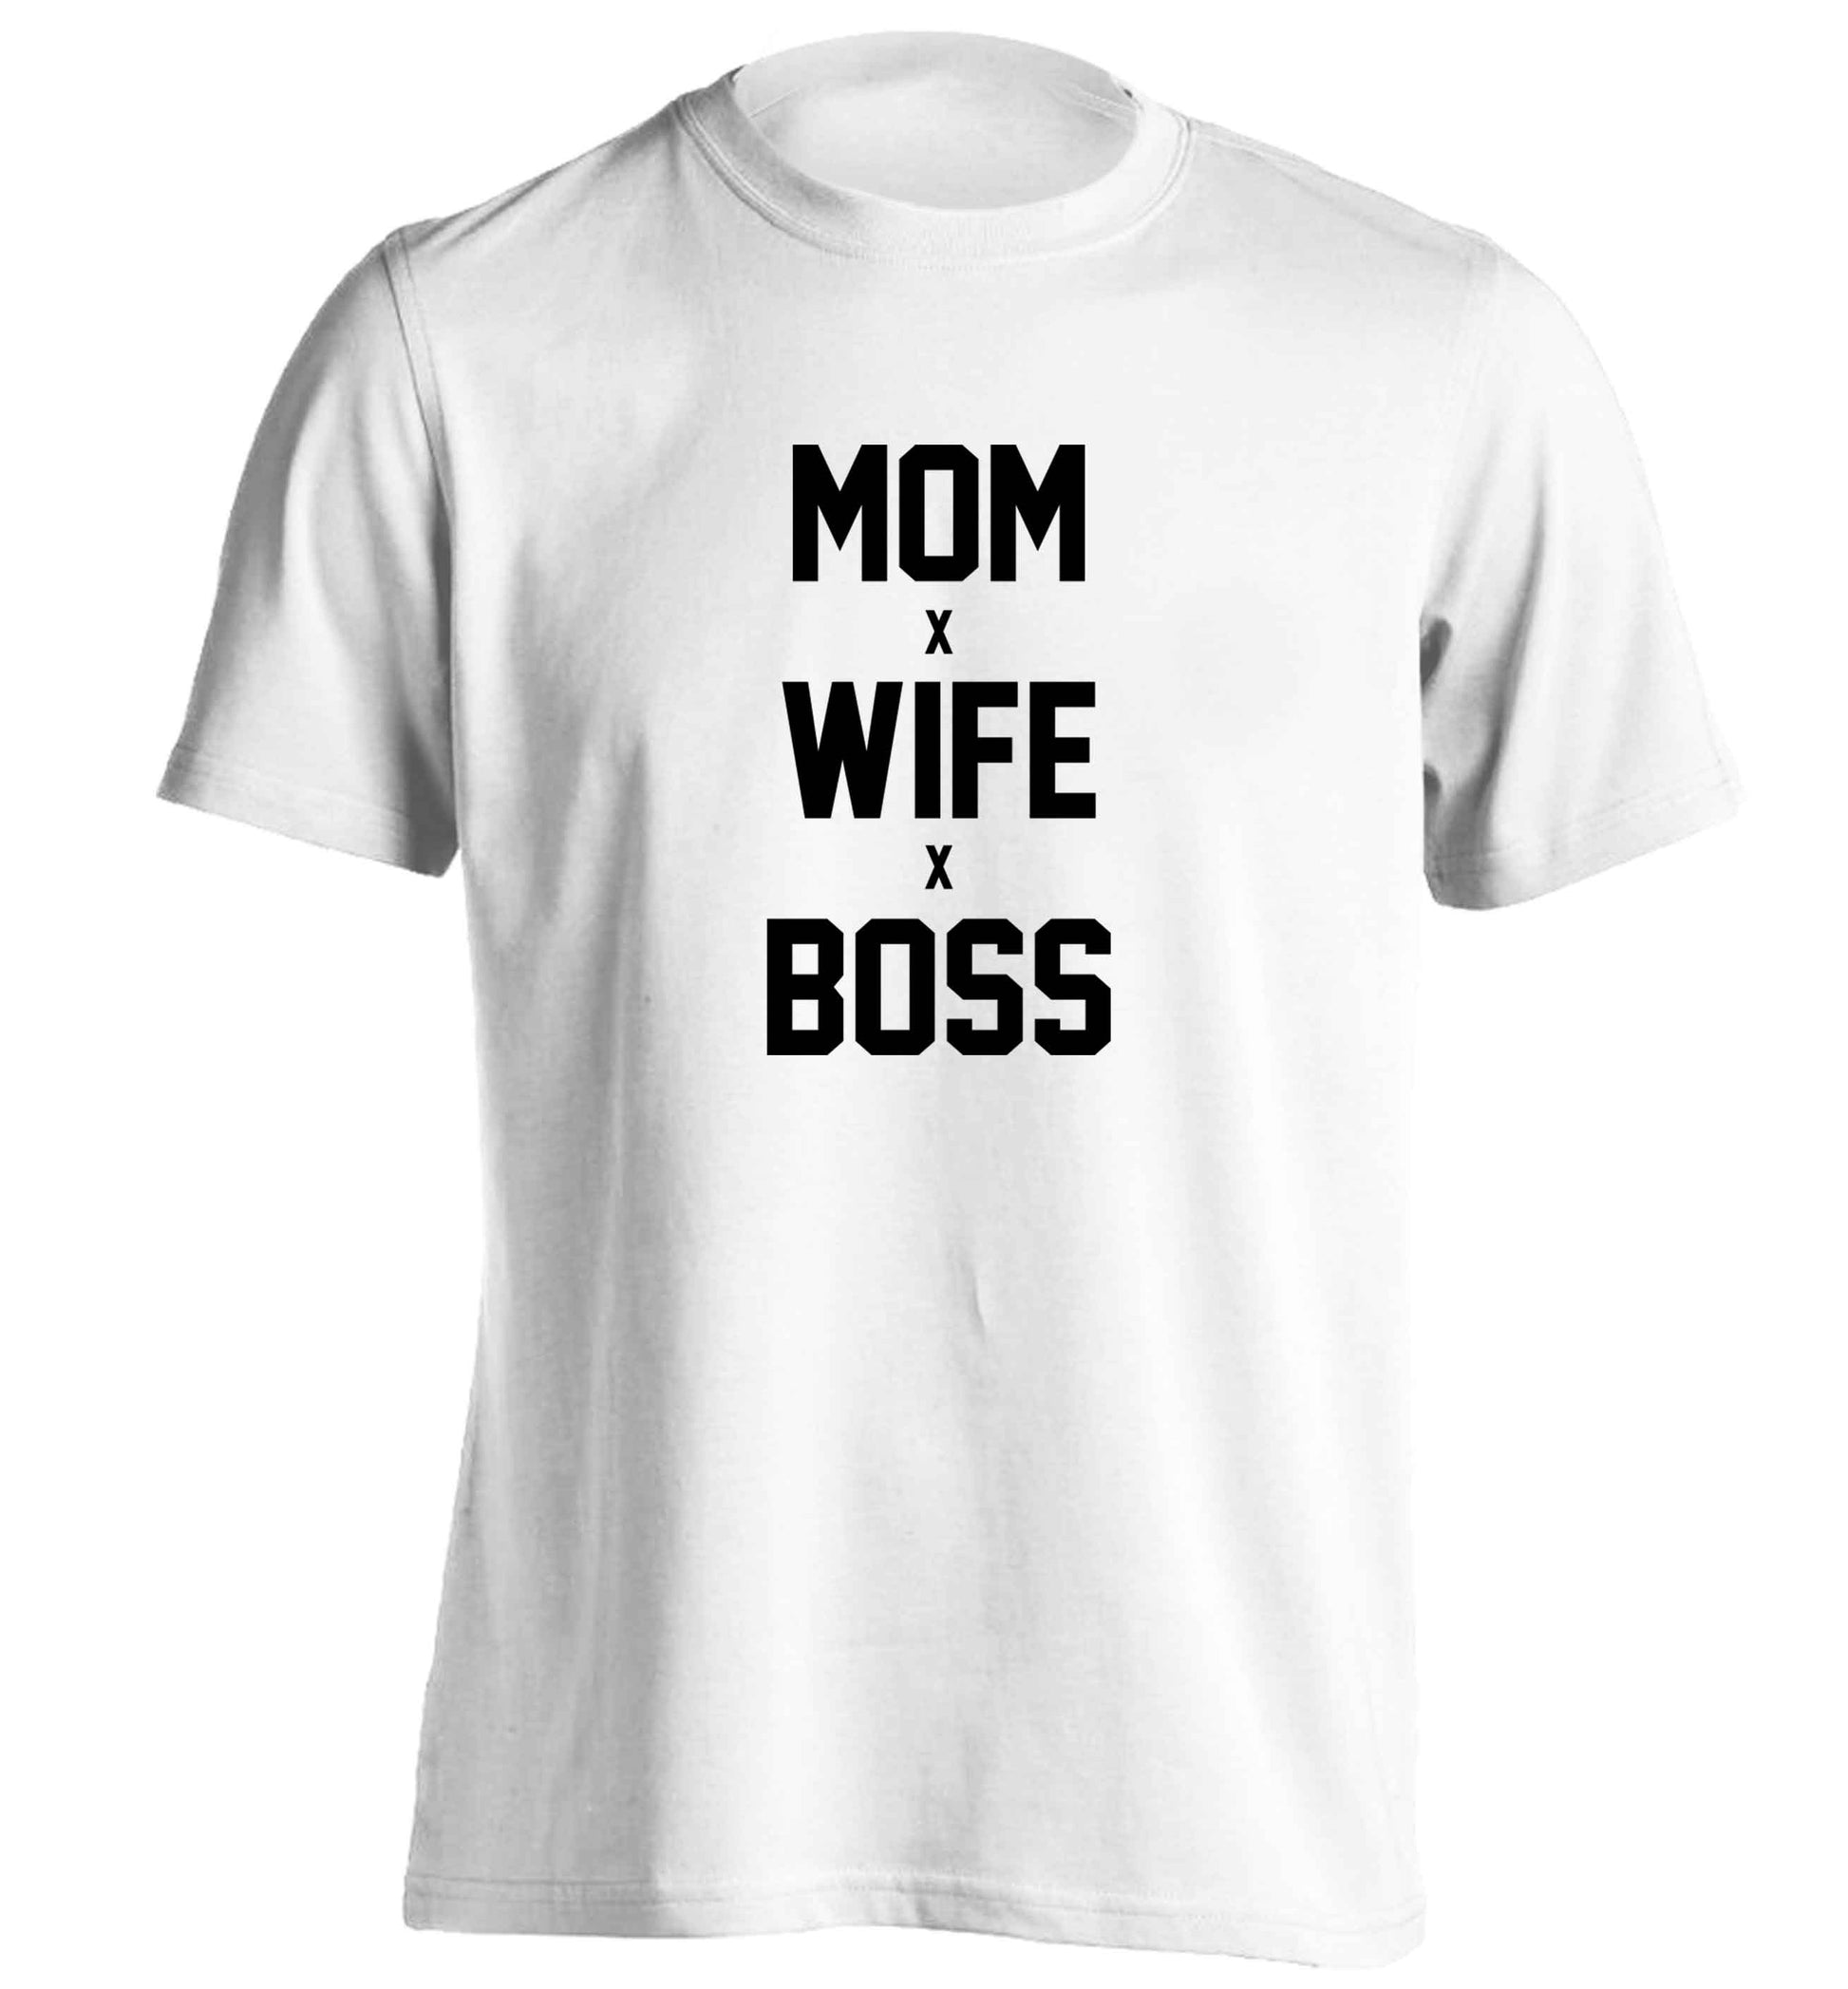 Mum wife boss adults unisex white Tshirt 2XL